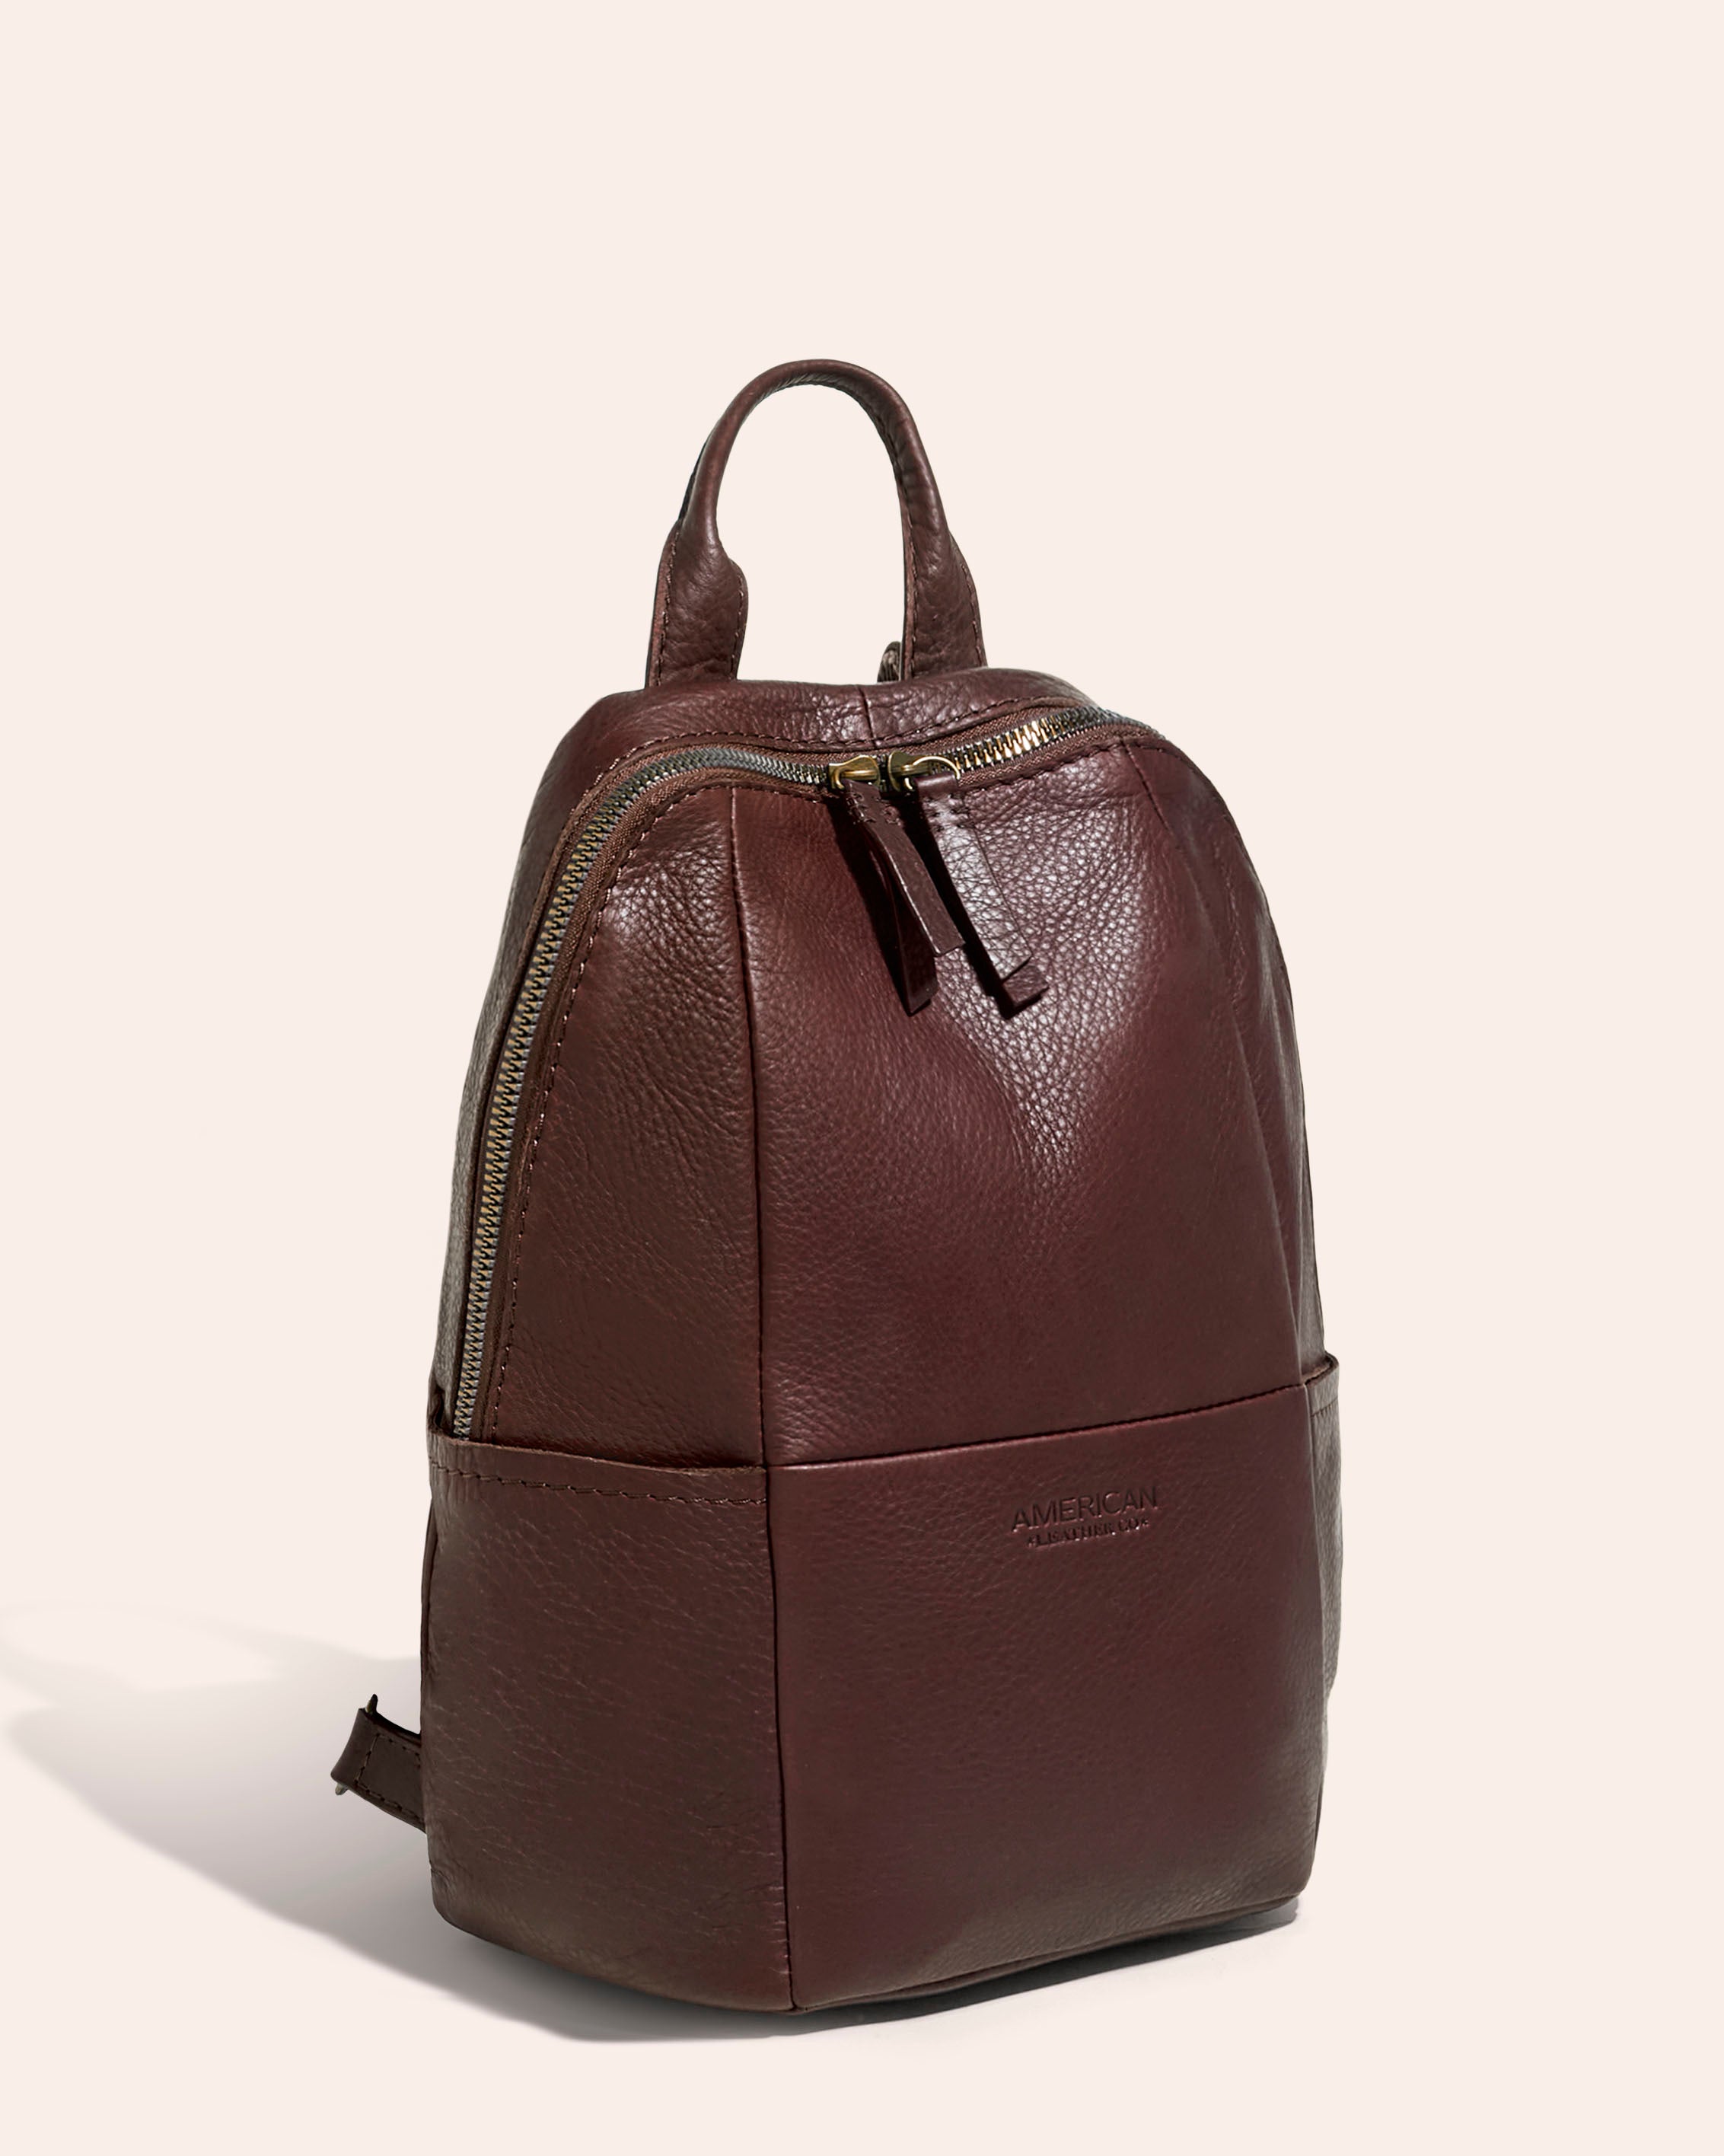 Melrose leather satchel